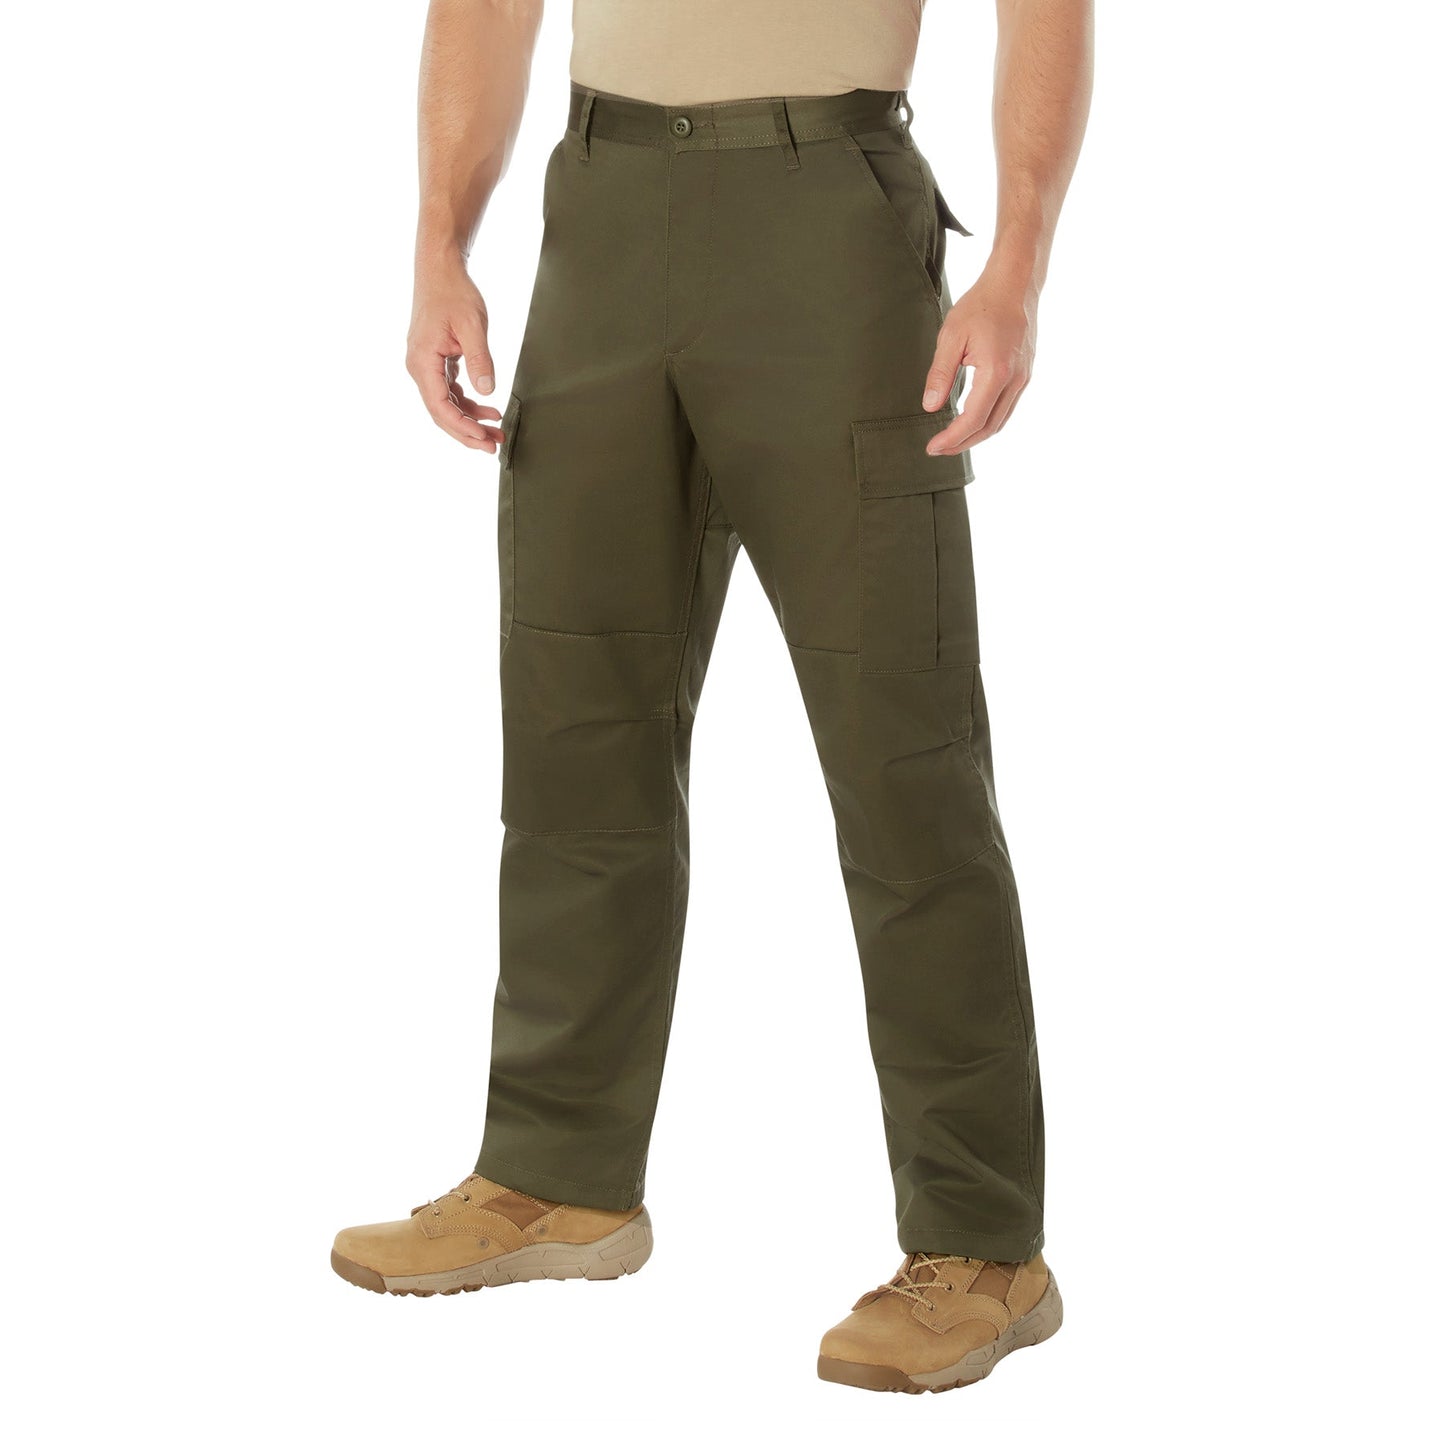 Rothco Tactical BDU Cargo Pants - Cadet Blue